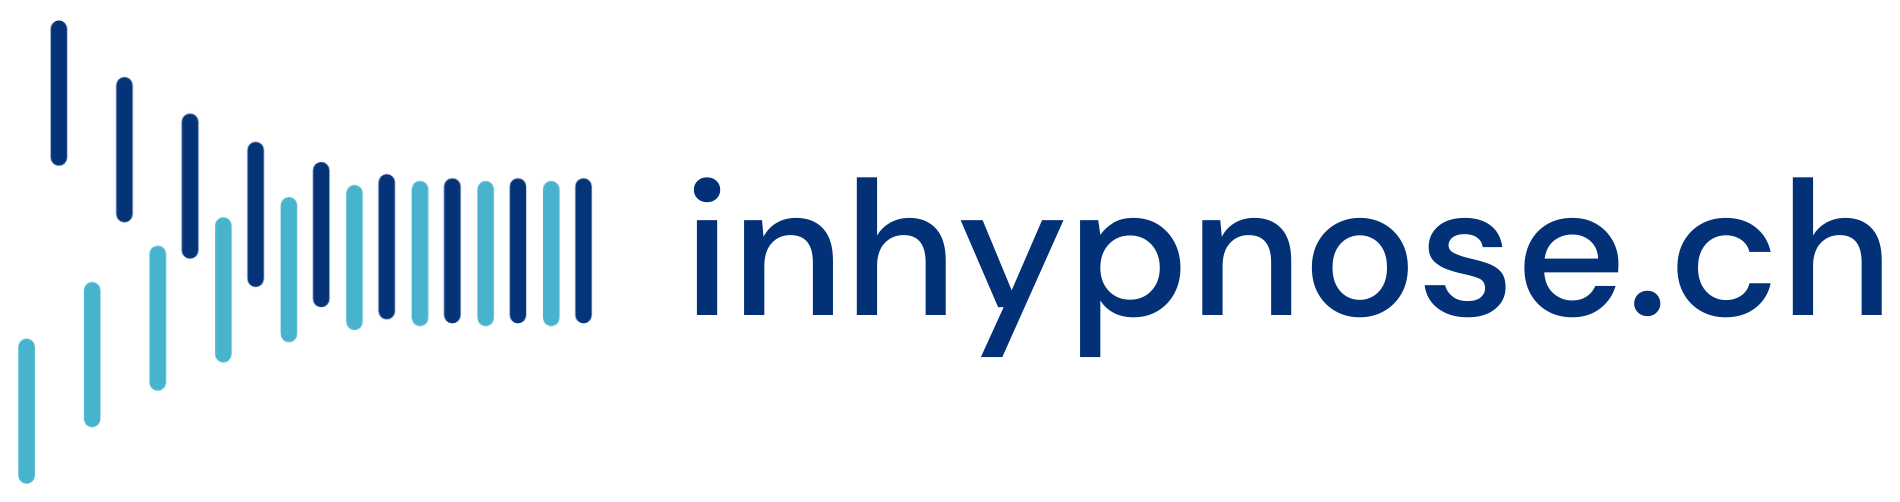 inhypnose_logo1